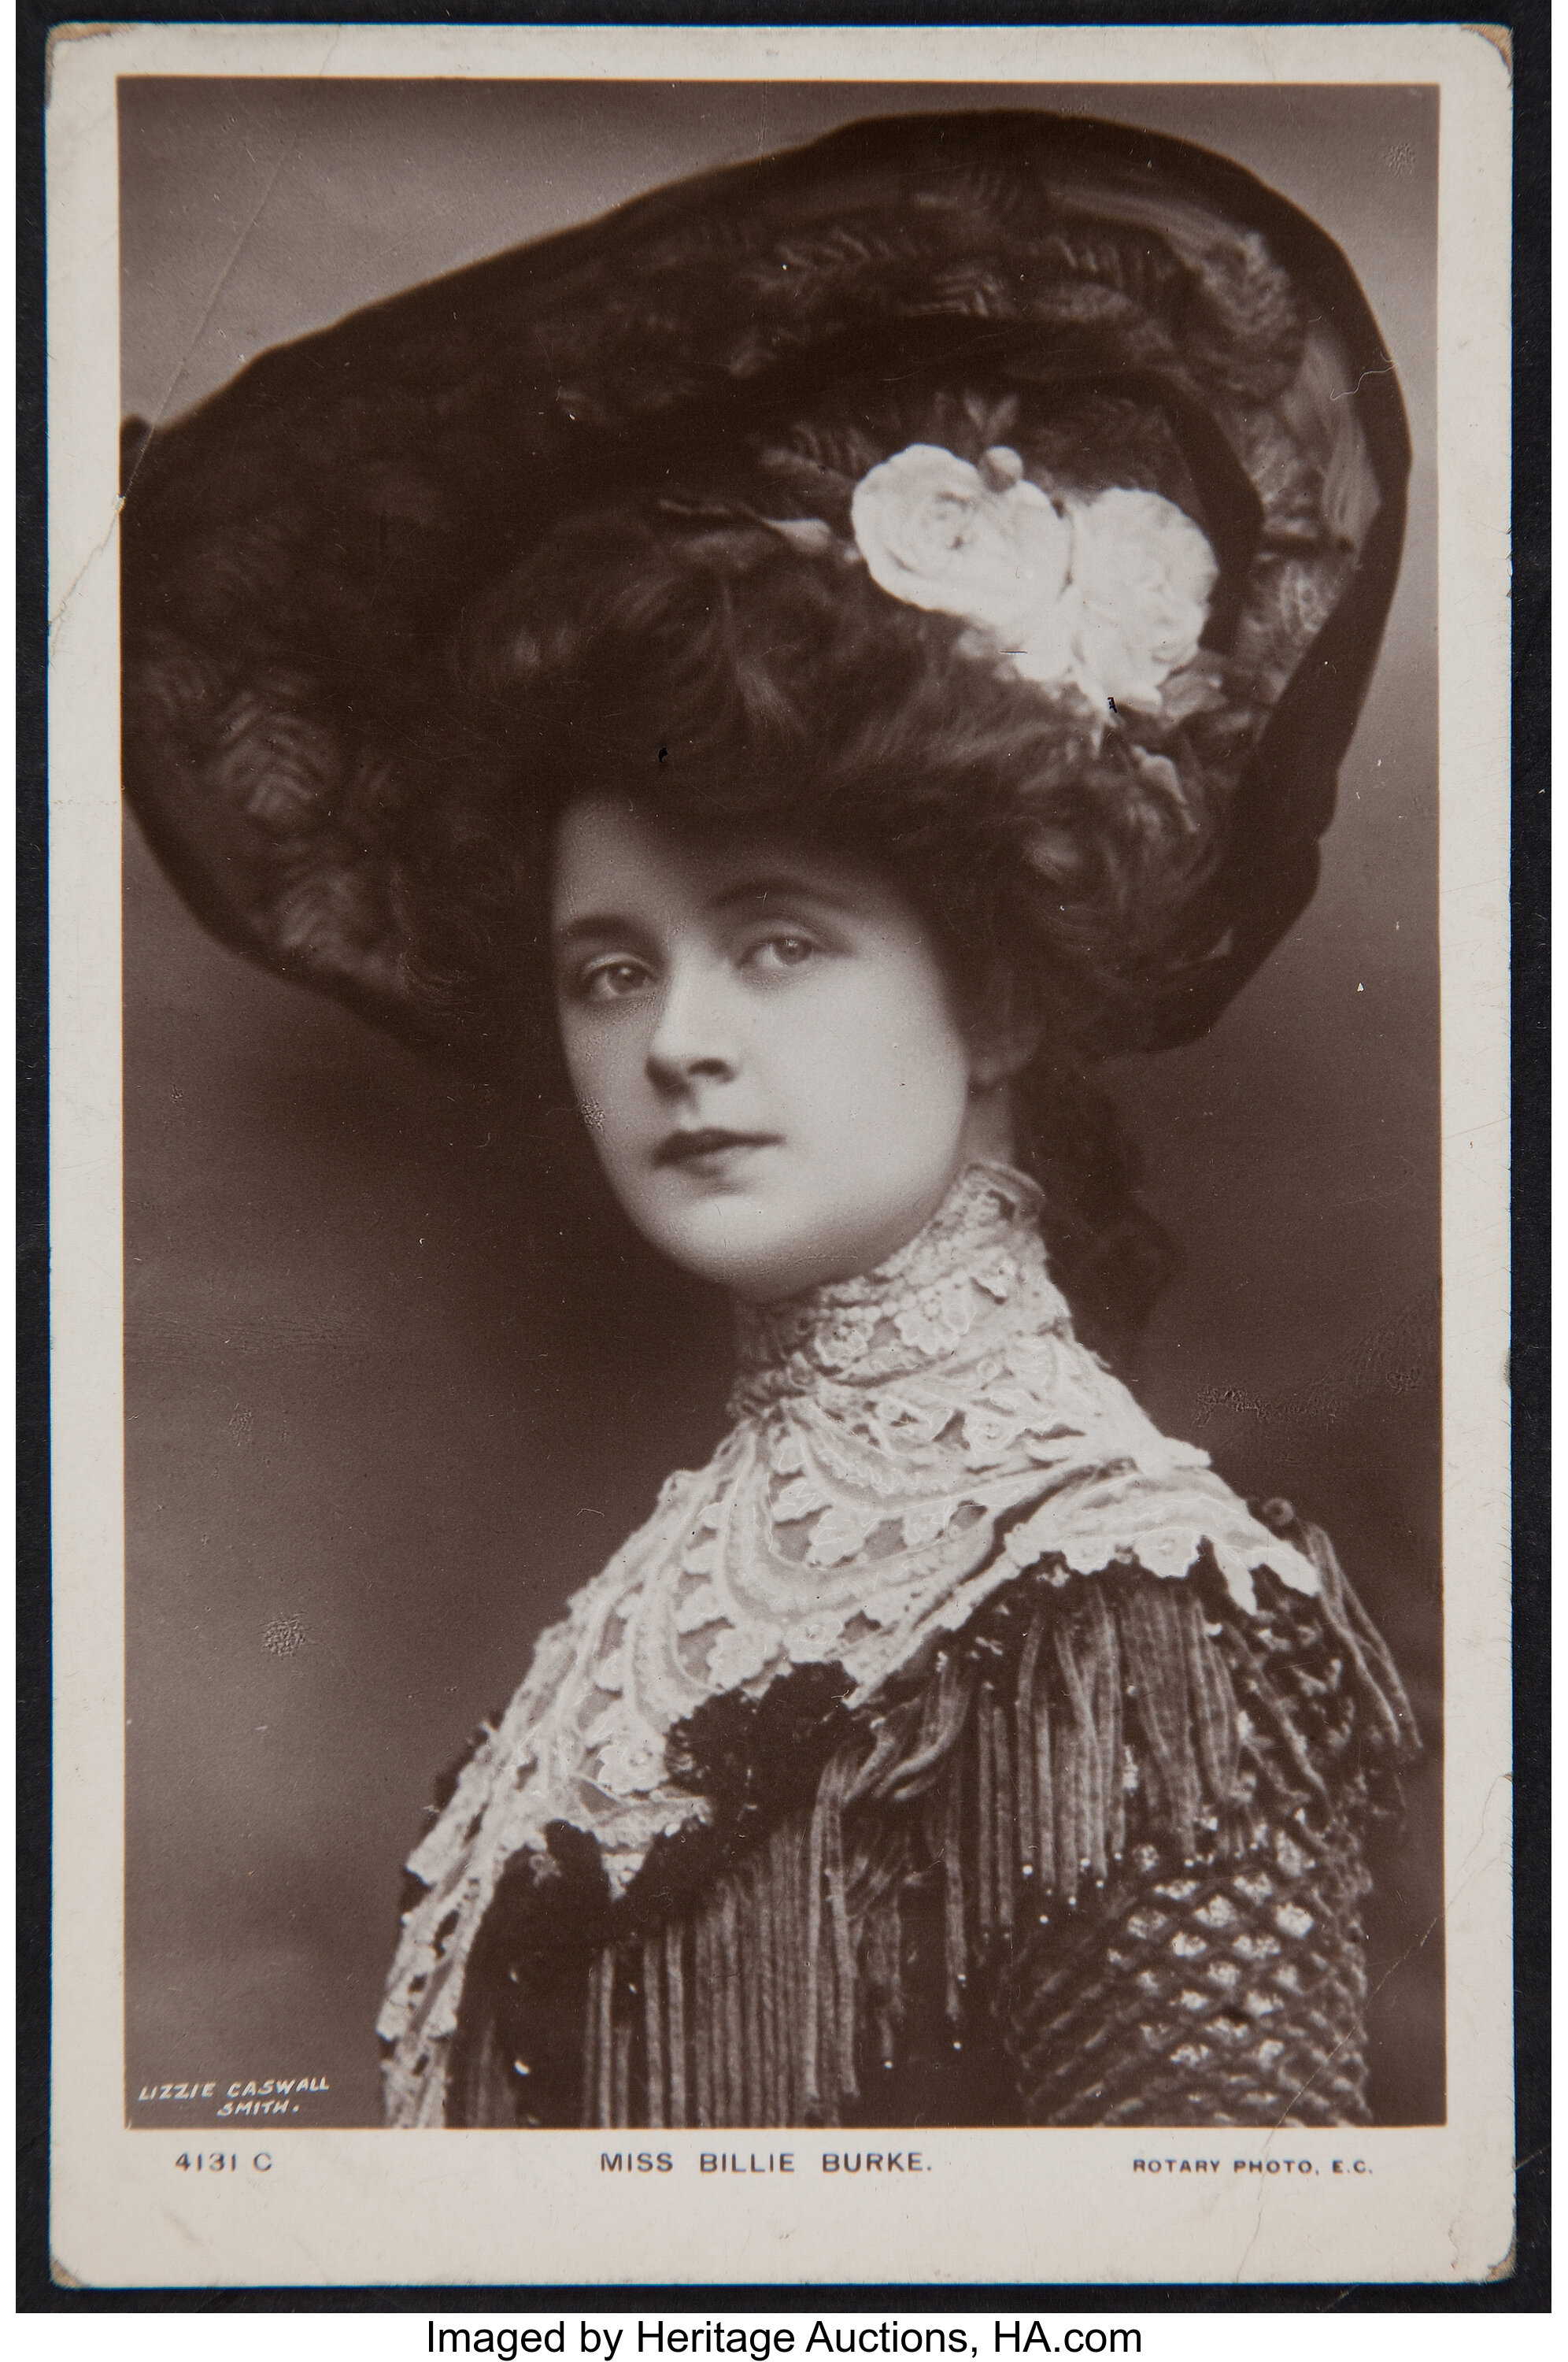 Billie Burke (1905-1910s). British Photo Postcards (4) (3.5